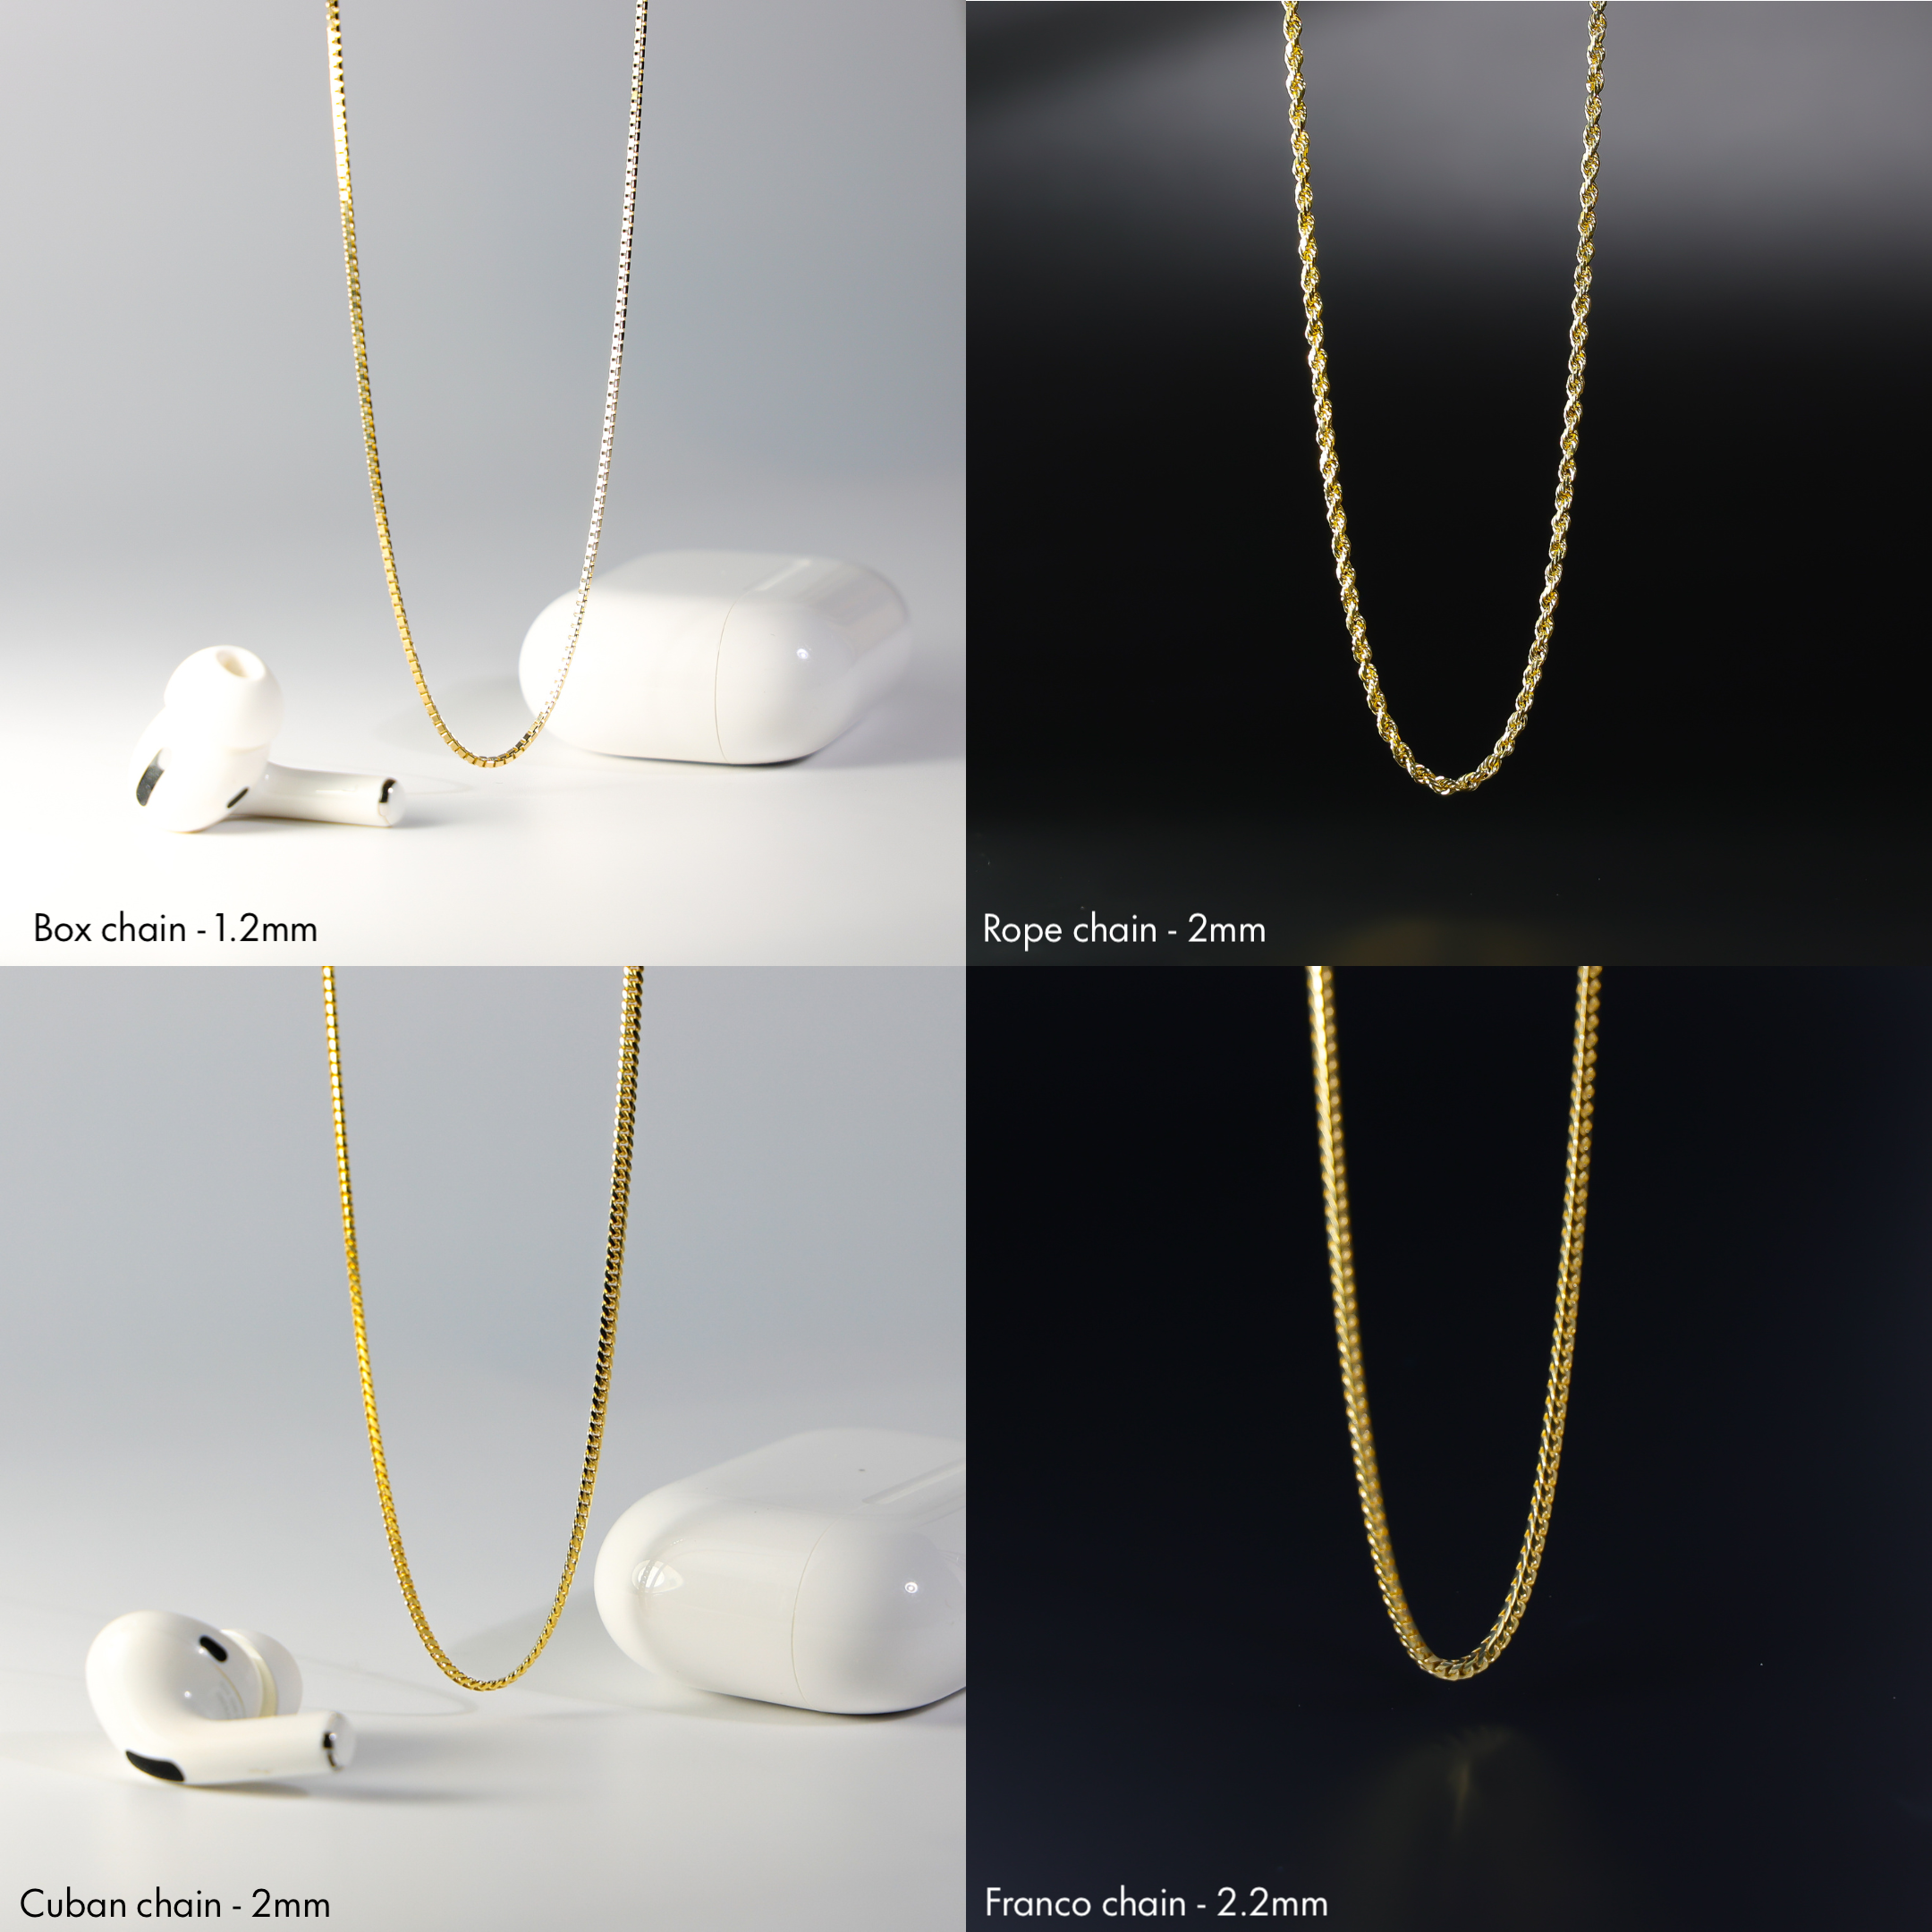 14K Gold Polished 3D Elephant Pendant - Charlie & Co. Jewelry